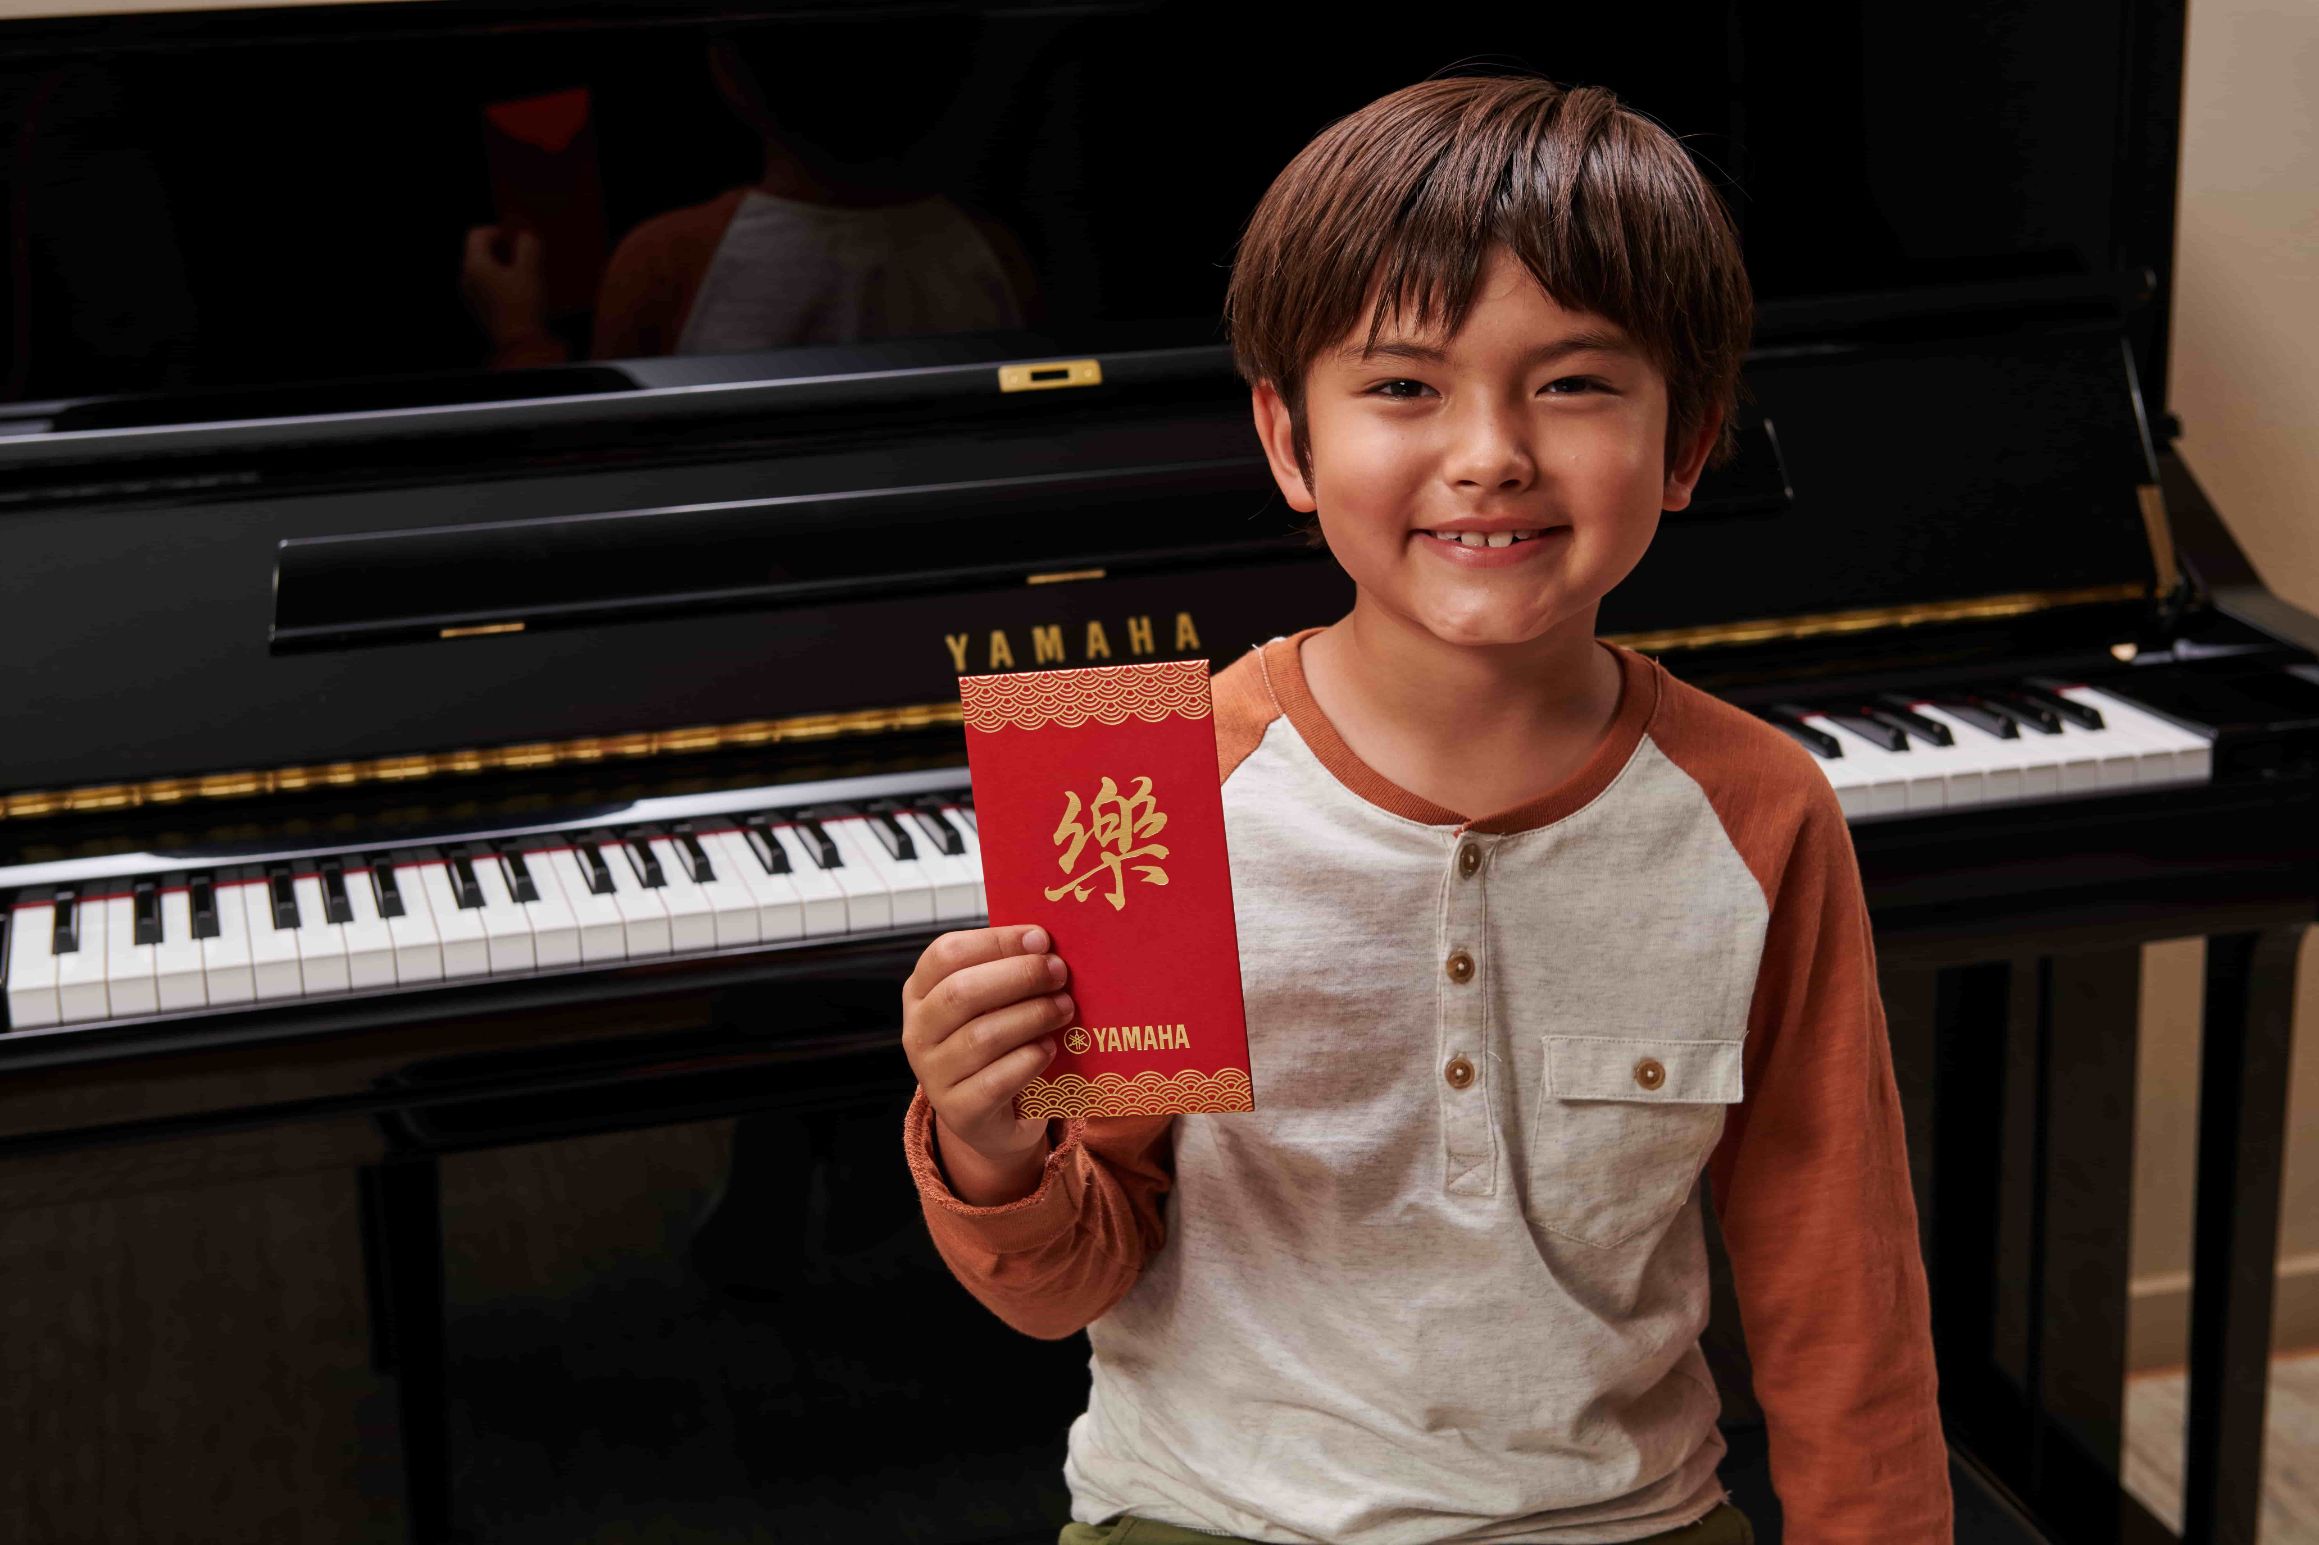 Boy with Yamaha piano